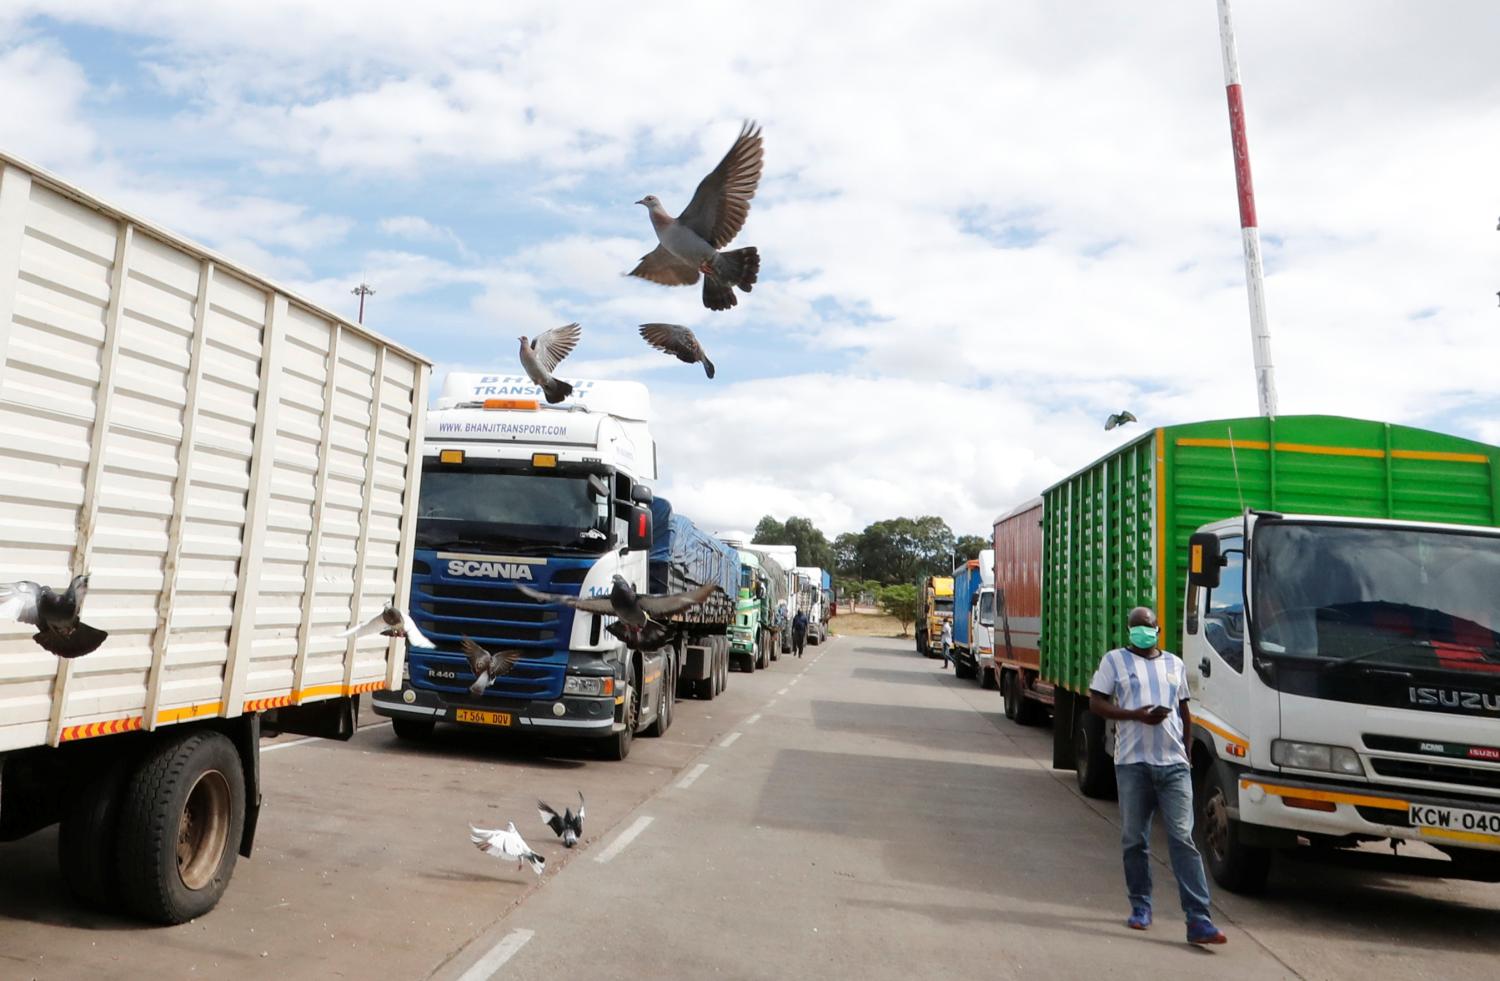 Pigeons fly past parked trucks at the Namanga one stop border crossing point between Kenya and Tanzania, amid the coronavirus disease (COVID-19) outbreak, in Namanga, Kenya May 12, 2020. REUTERS/Thomas Mukoya